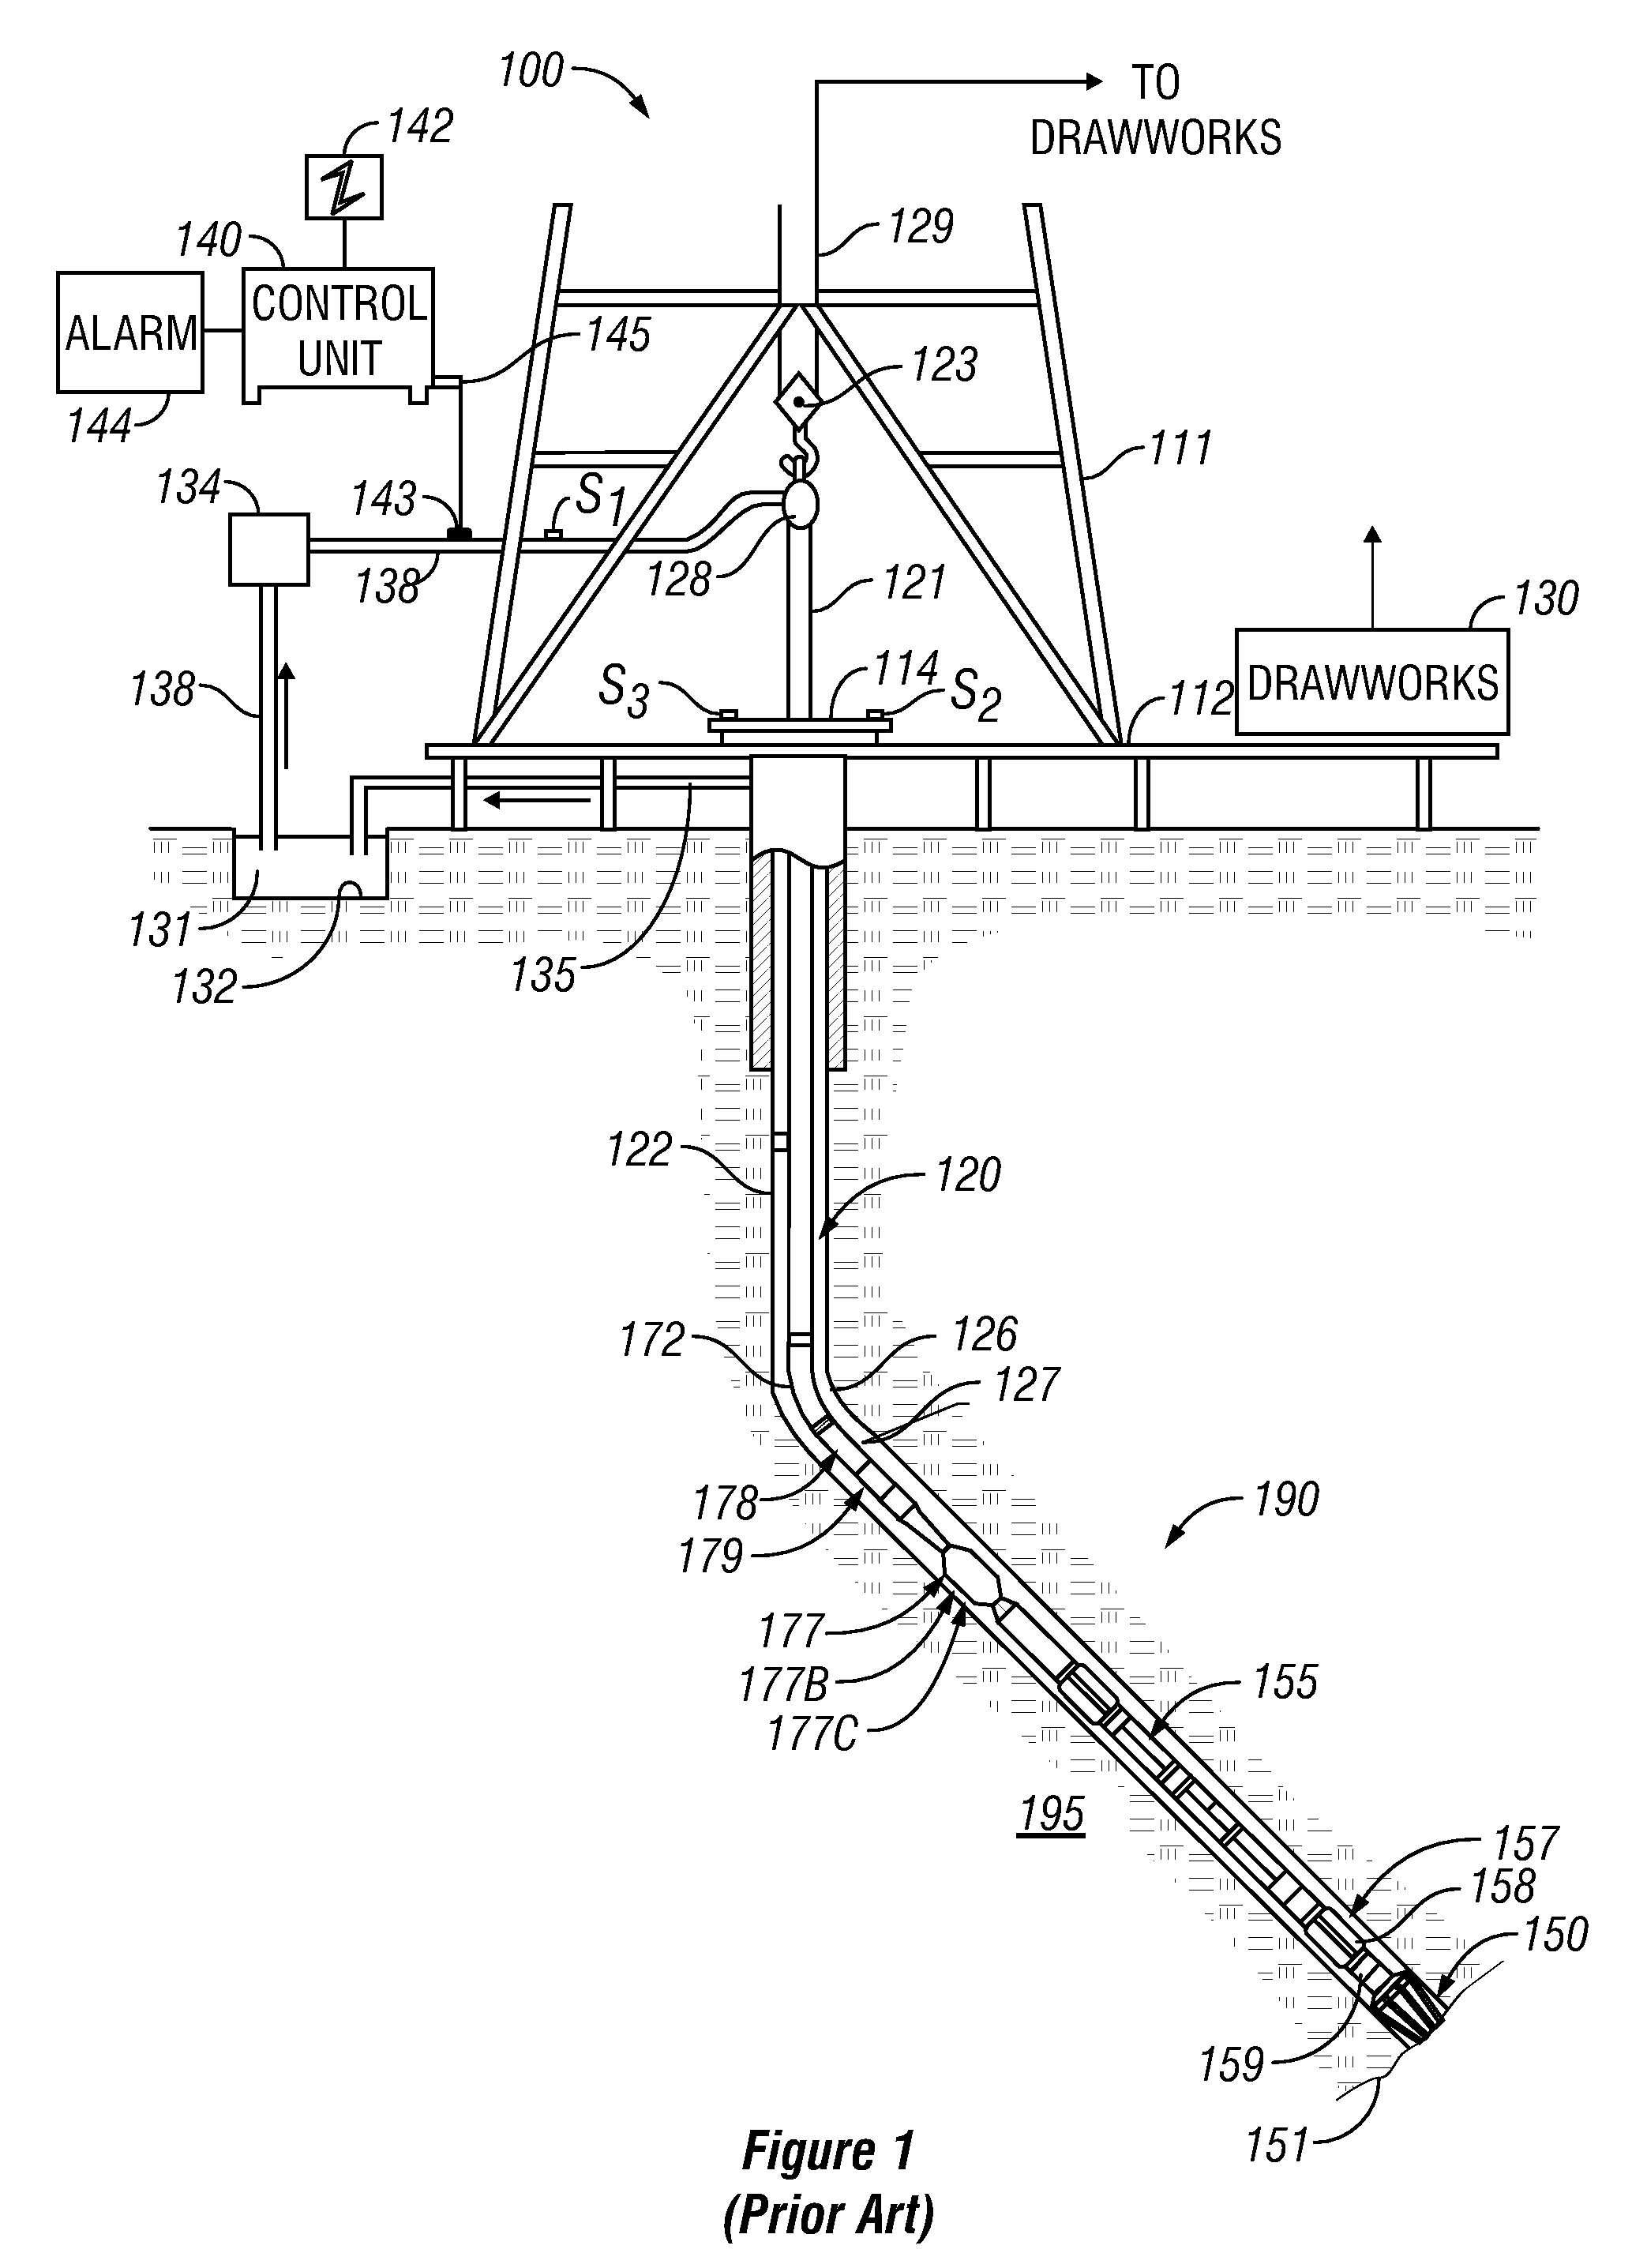 Formation evaluation using estimated borehole tool position